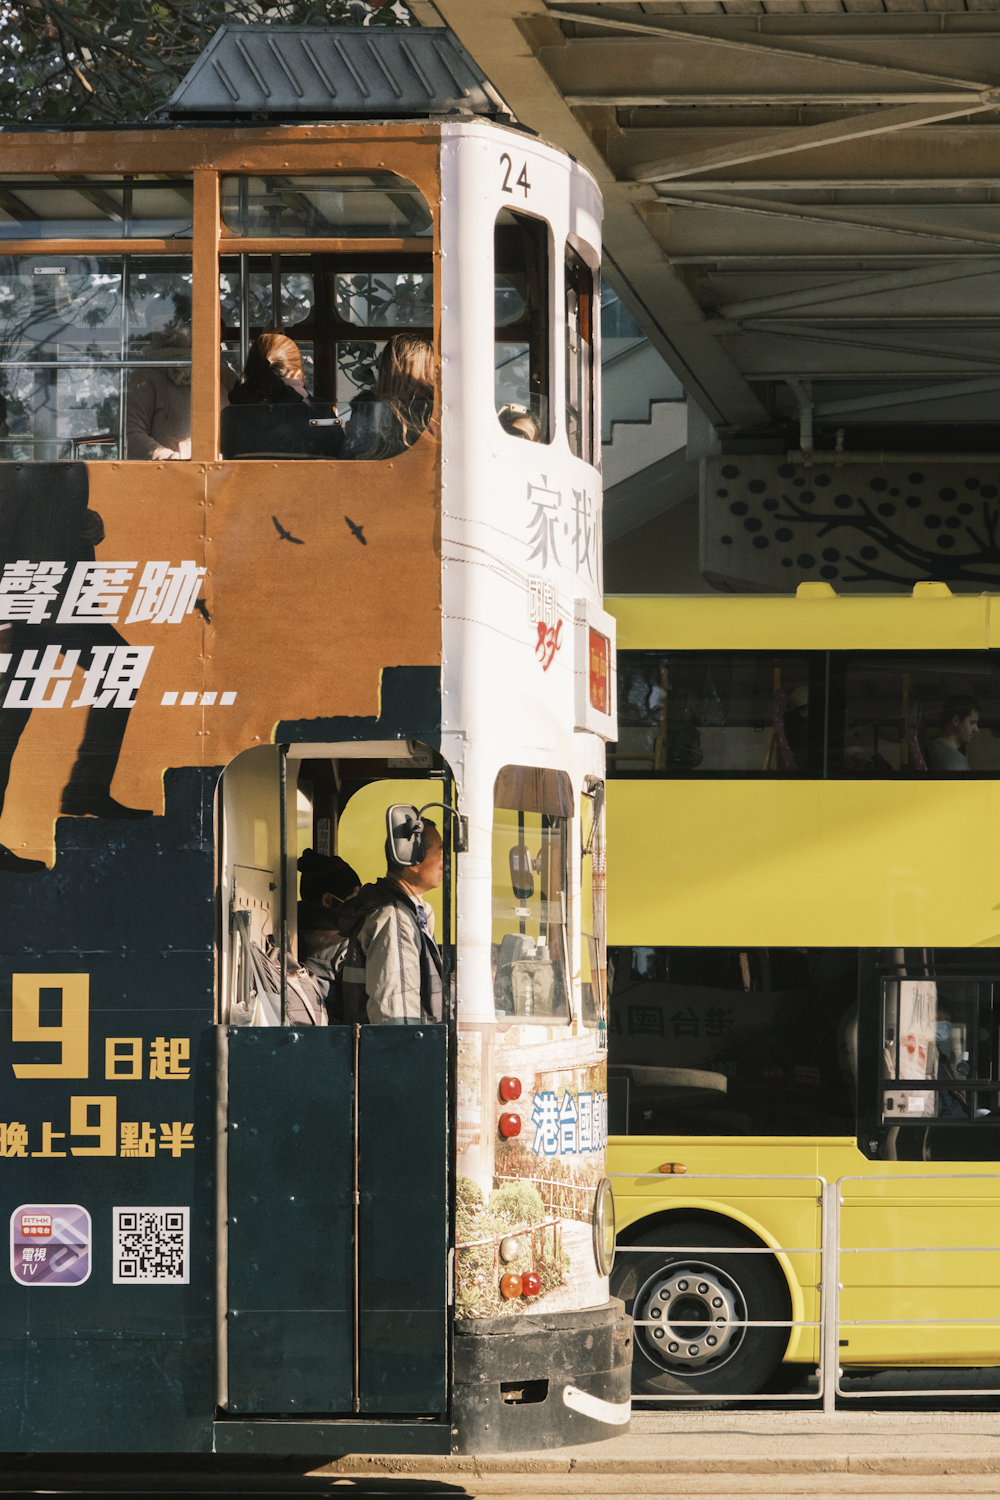 a yellow double decker bus driving down a street